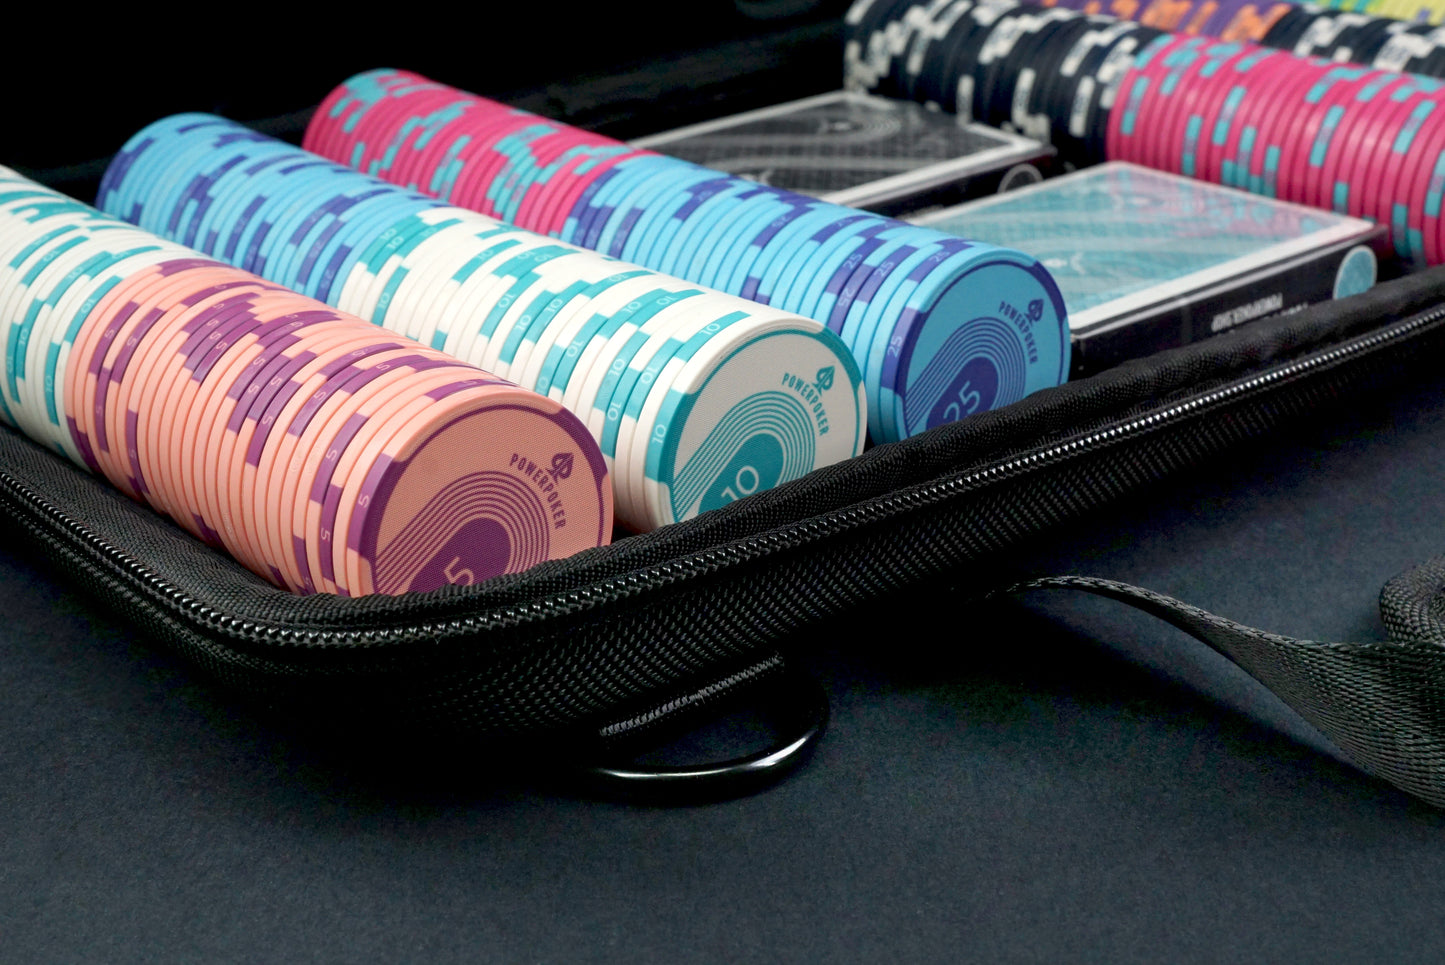 Poker case complete set - "Sports" tournament 300